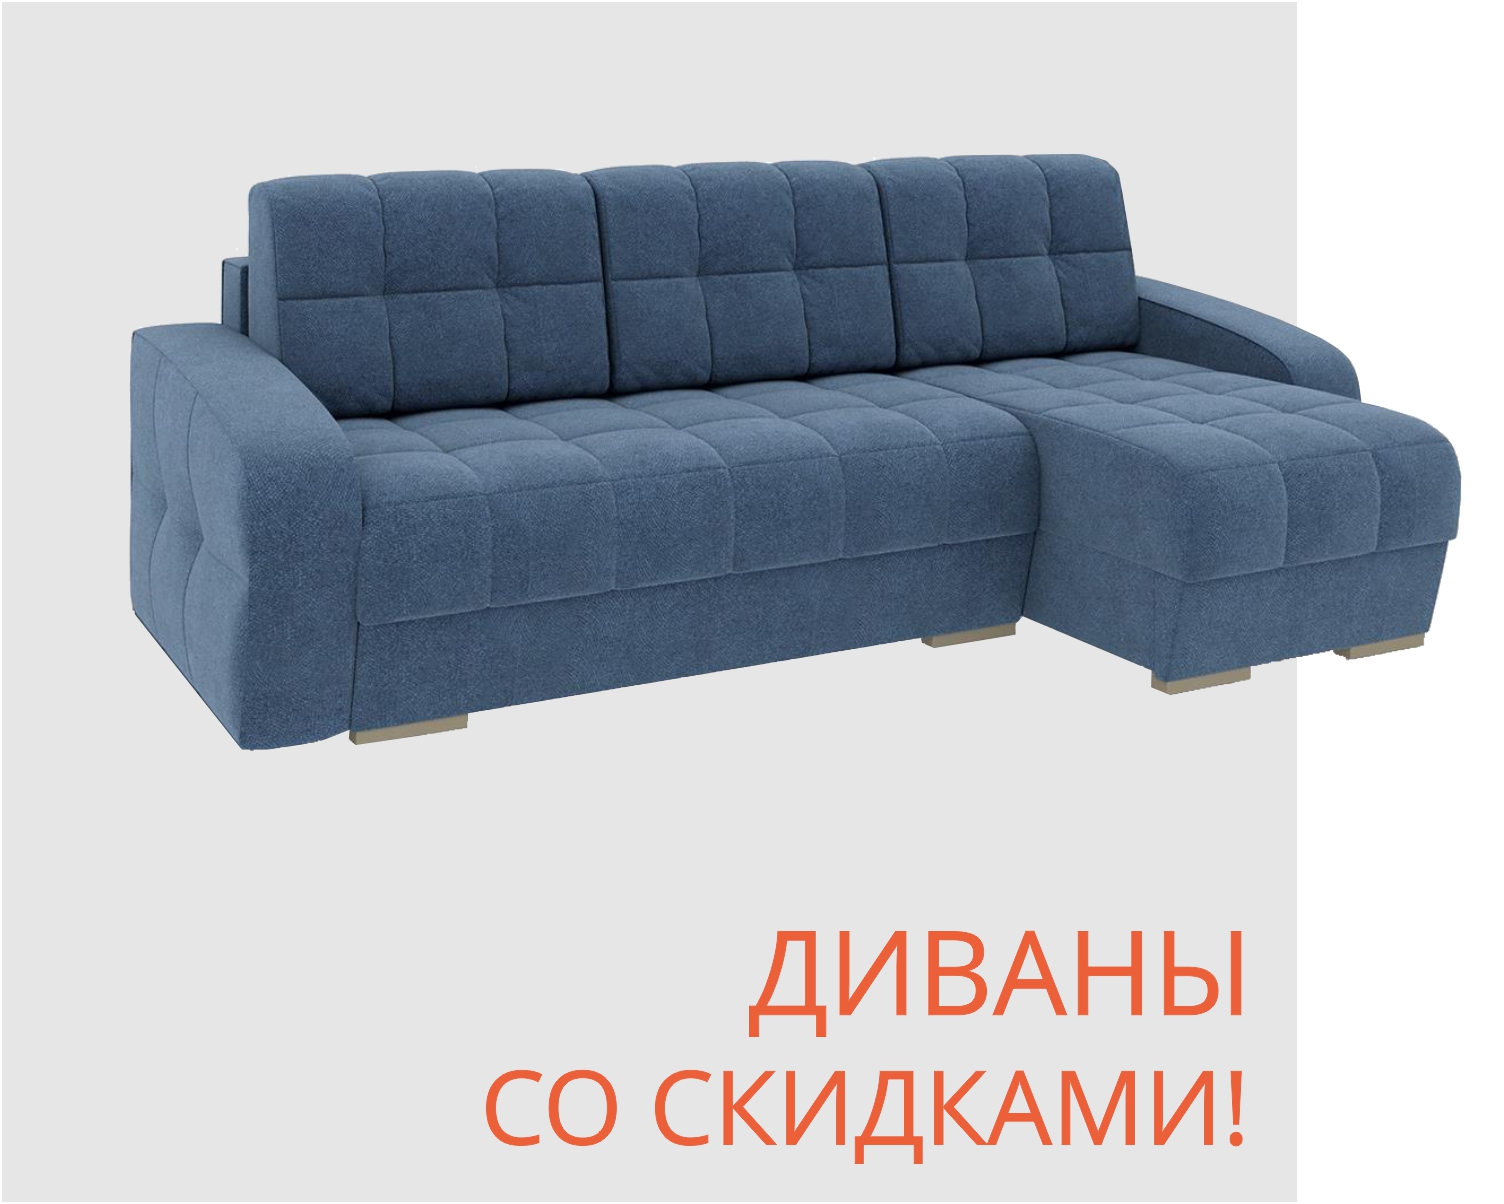 Интернет Магазин Мебели Минск С Ценами